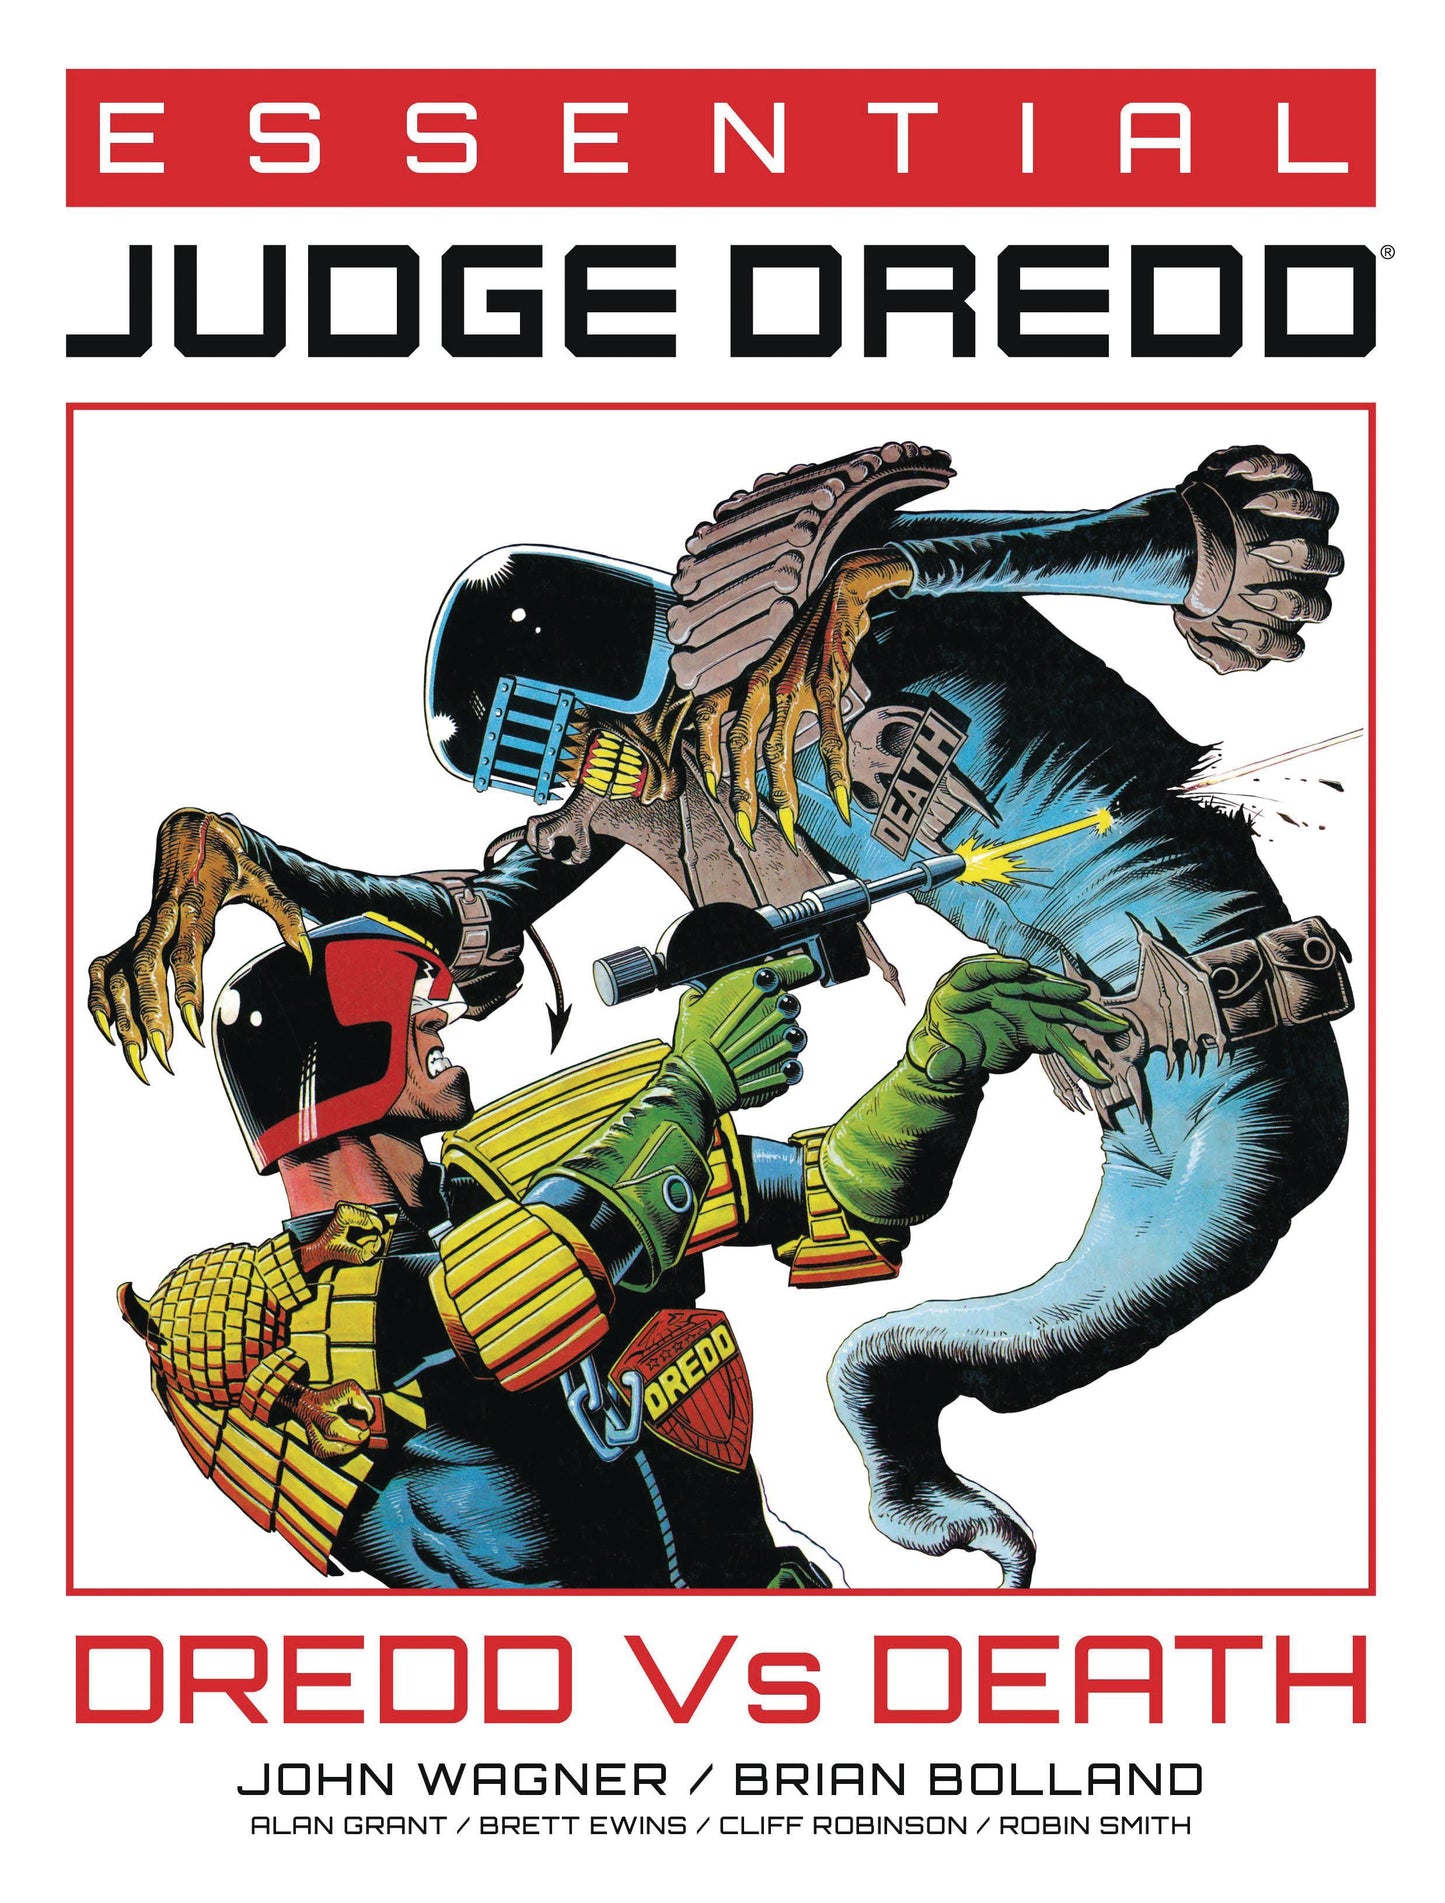 ESSENTIAL JUDGE DREDD - DREDD VS DEATH